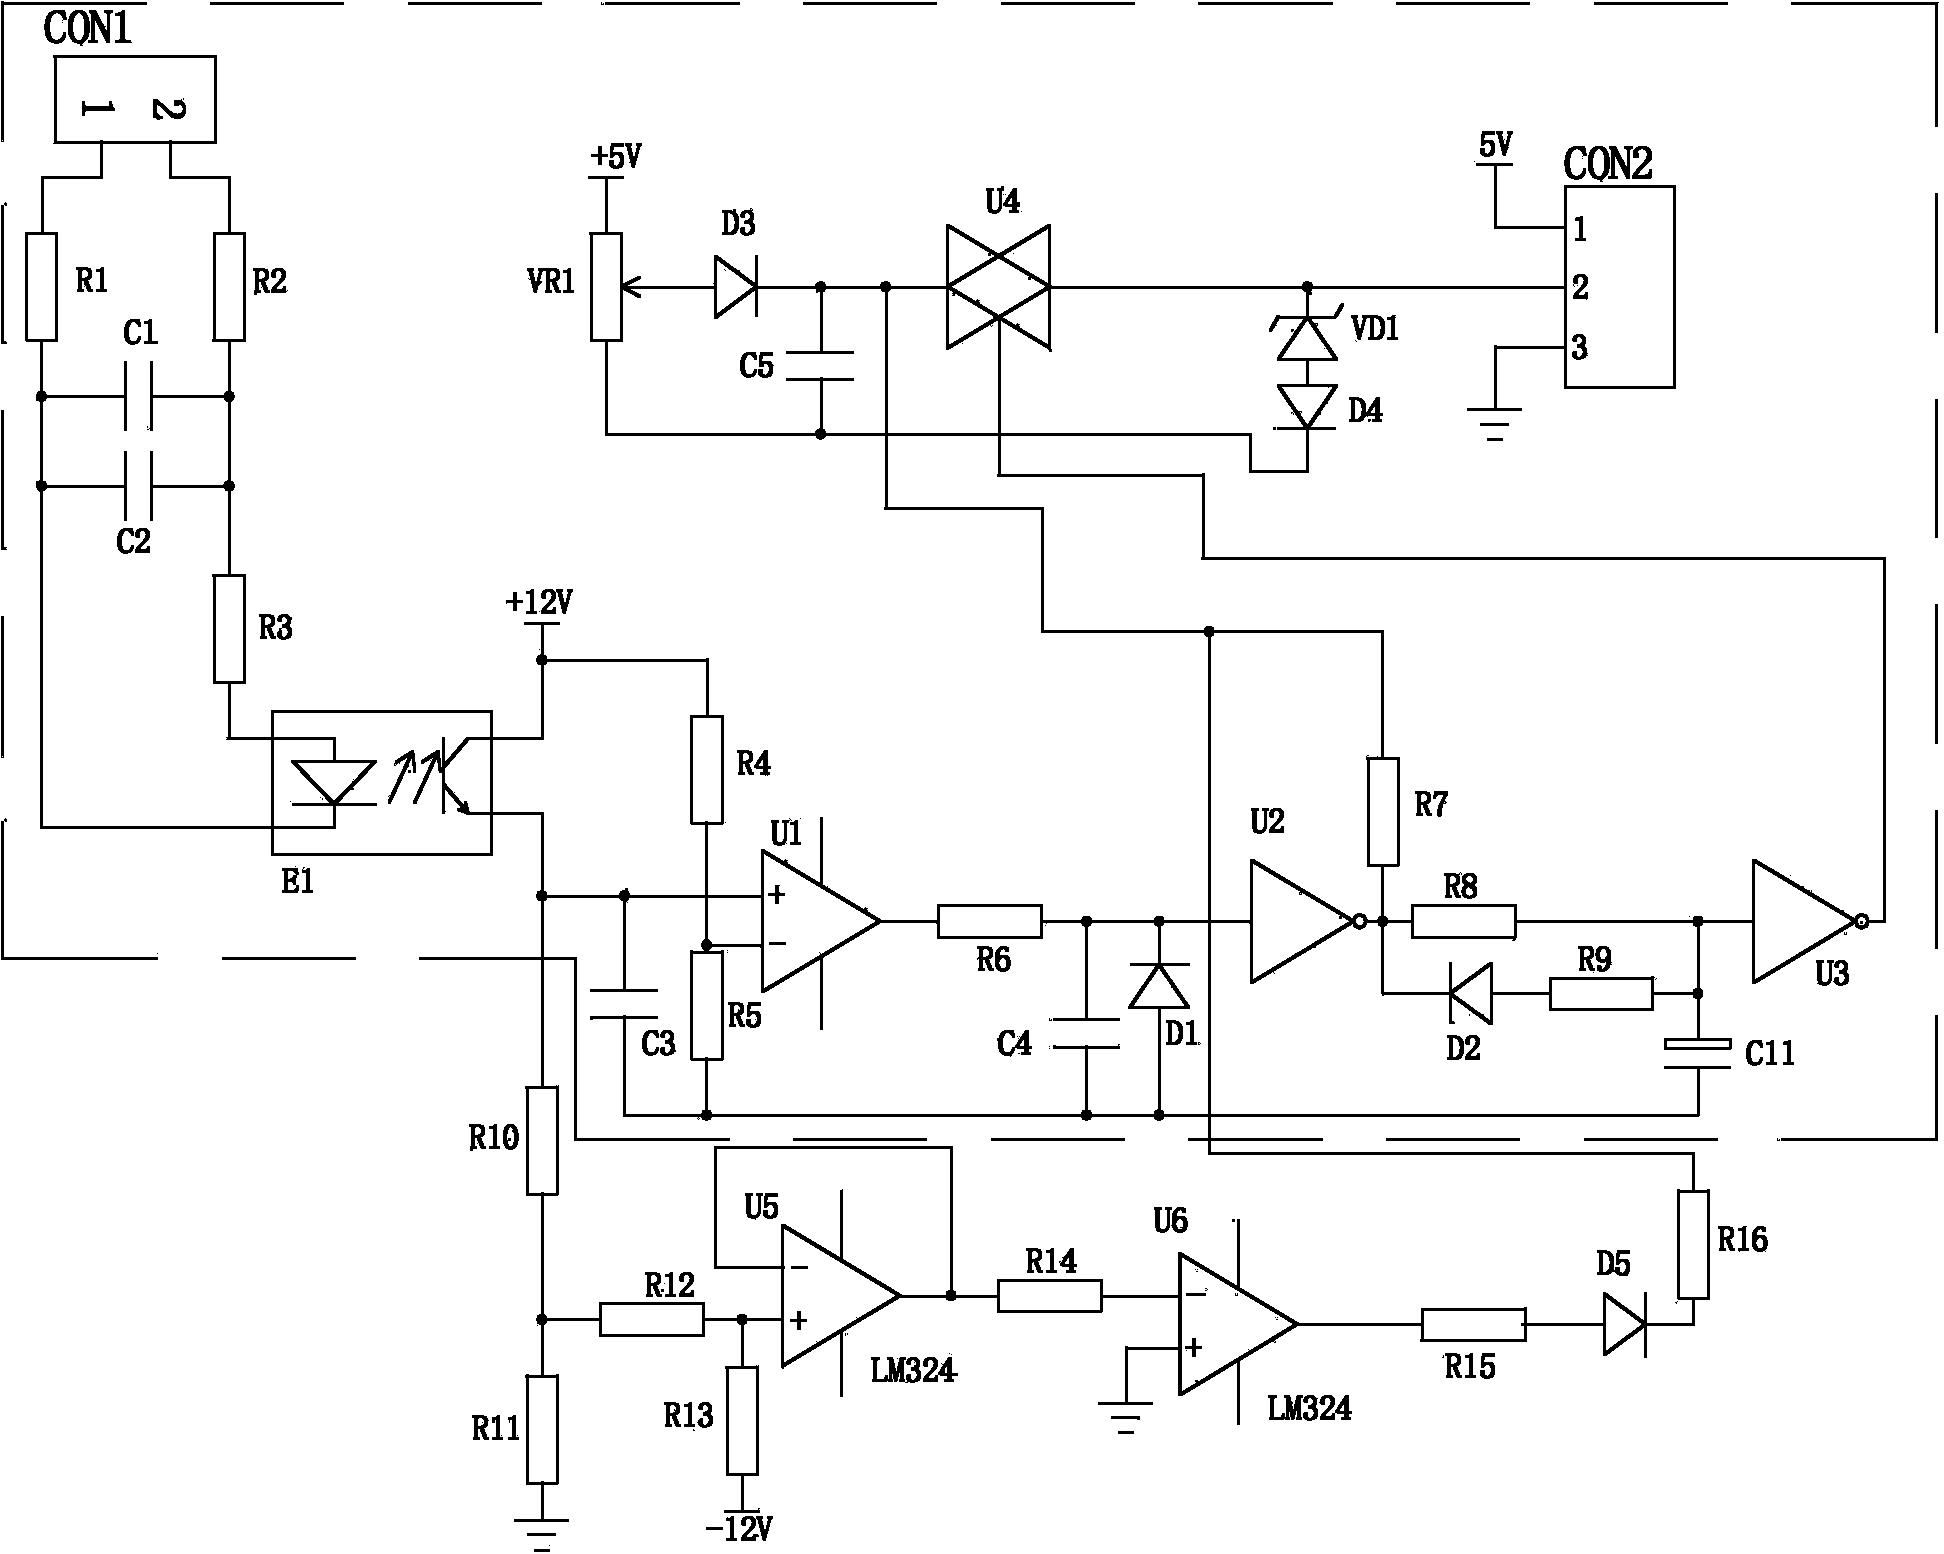 Control circuit of inverter welding machine